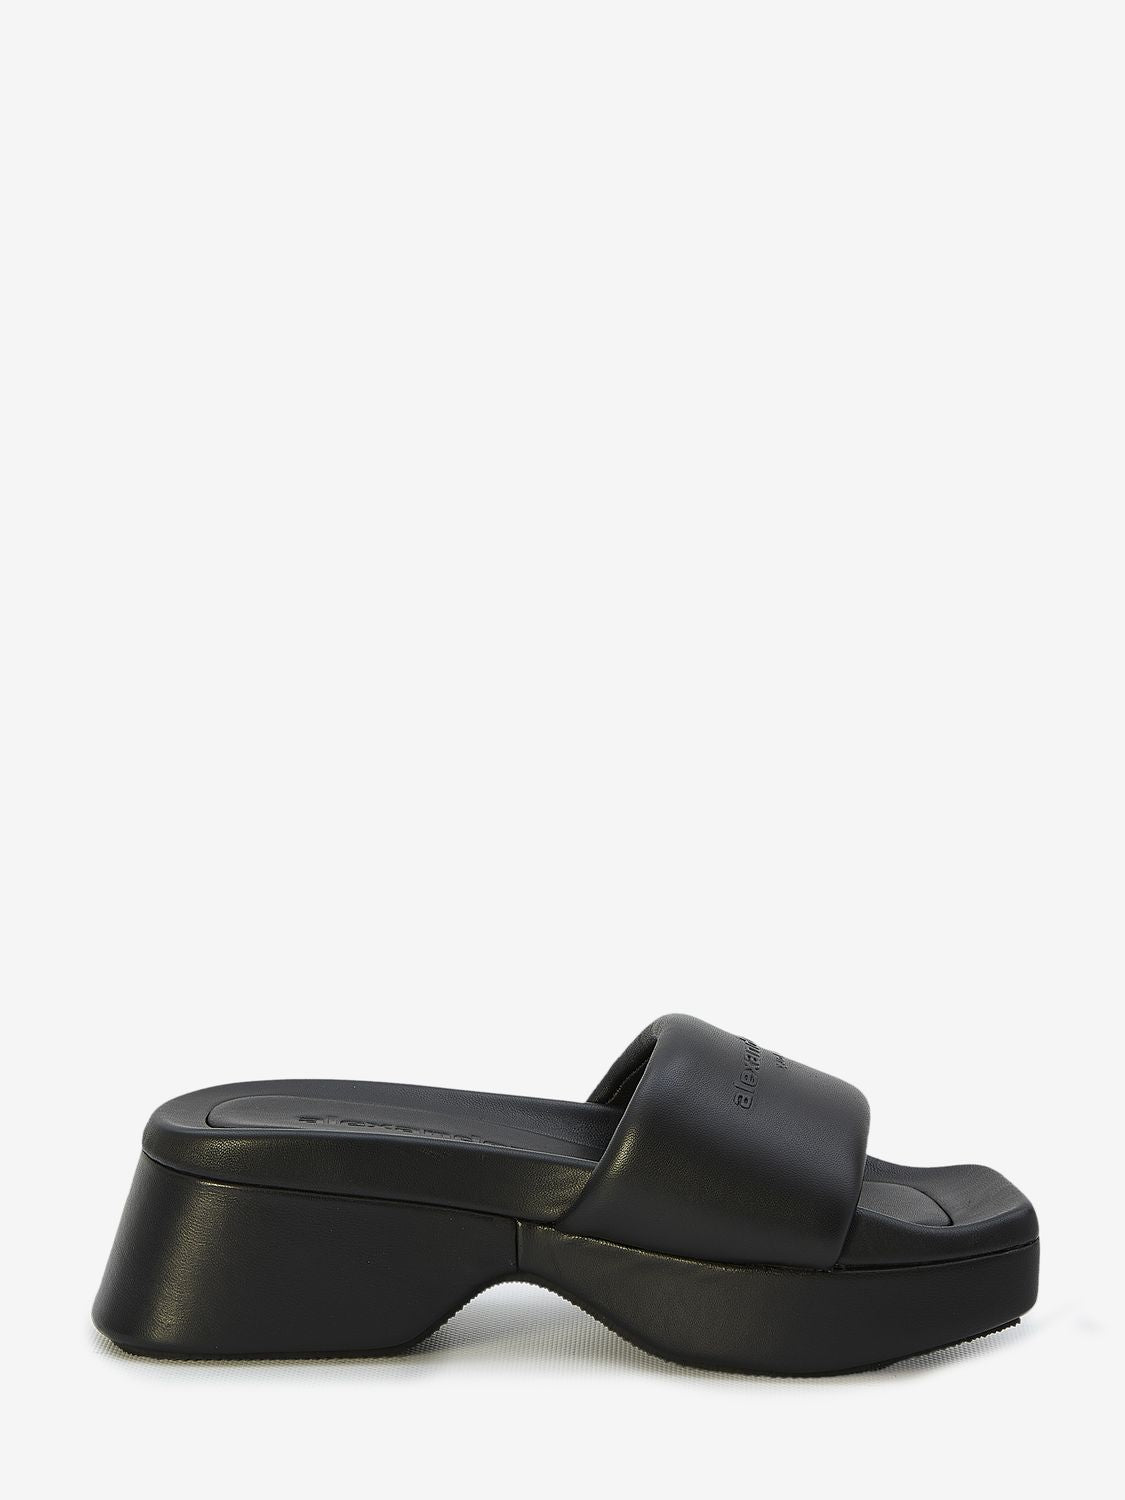 ALEXANDER WANG Sleek Leather Flat Sandals for Women - Black